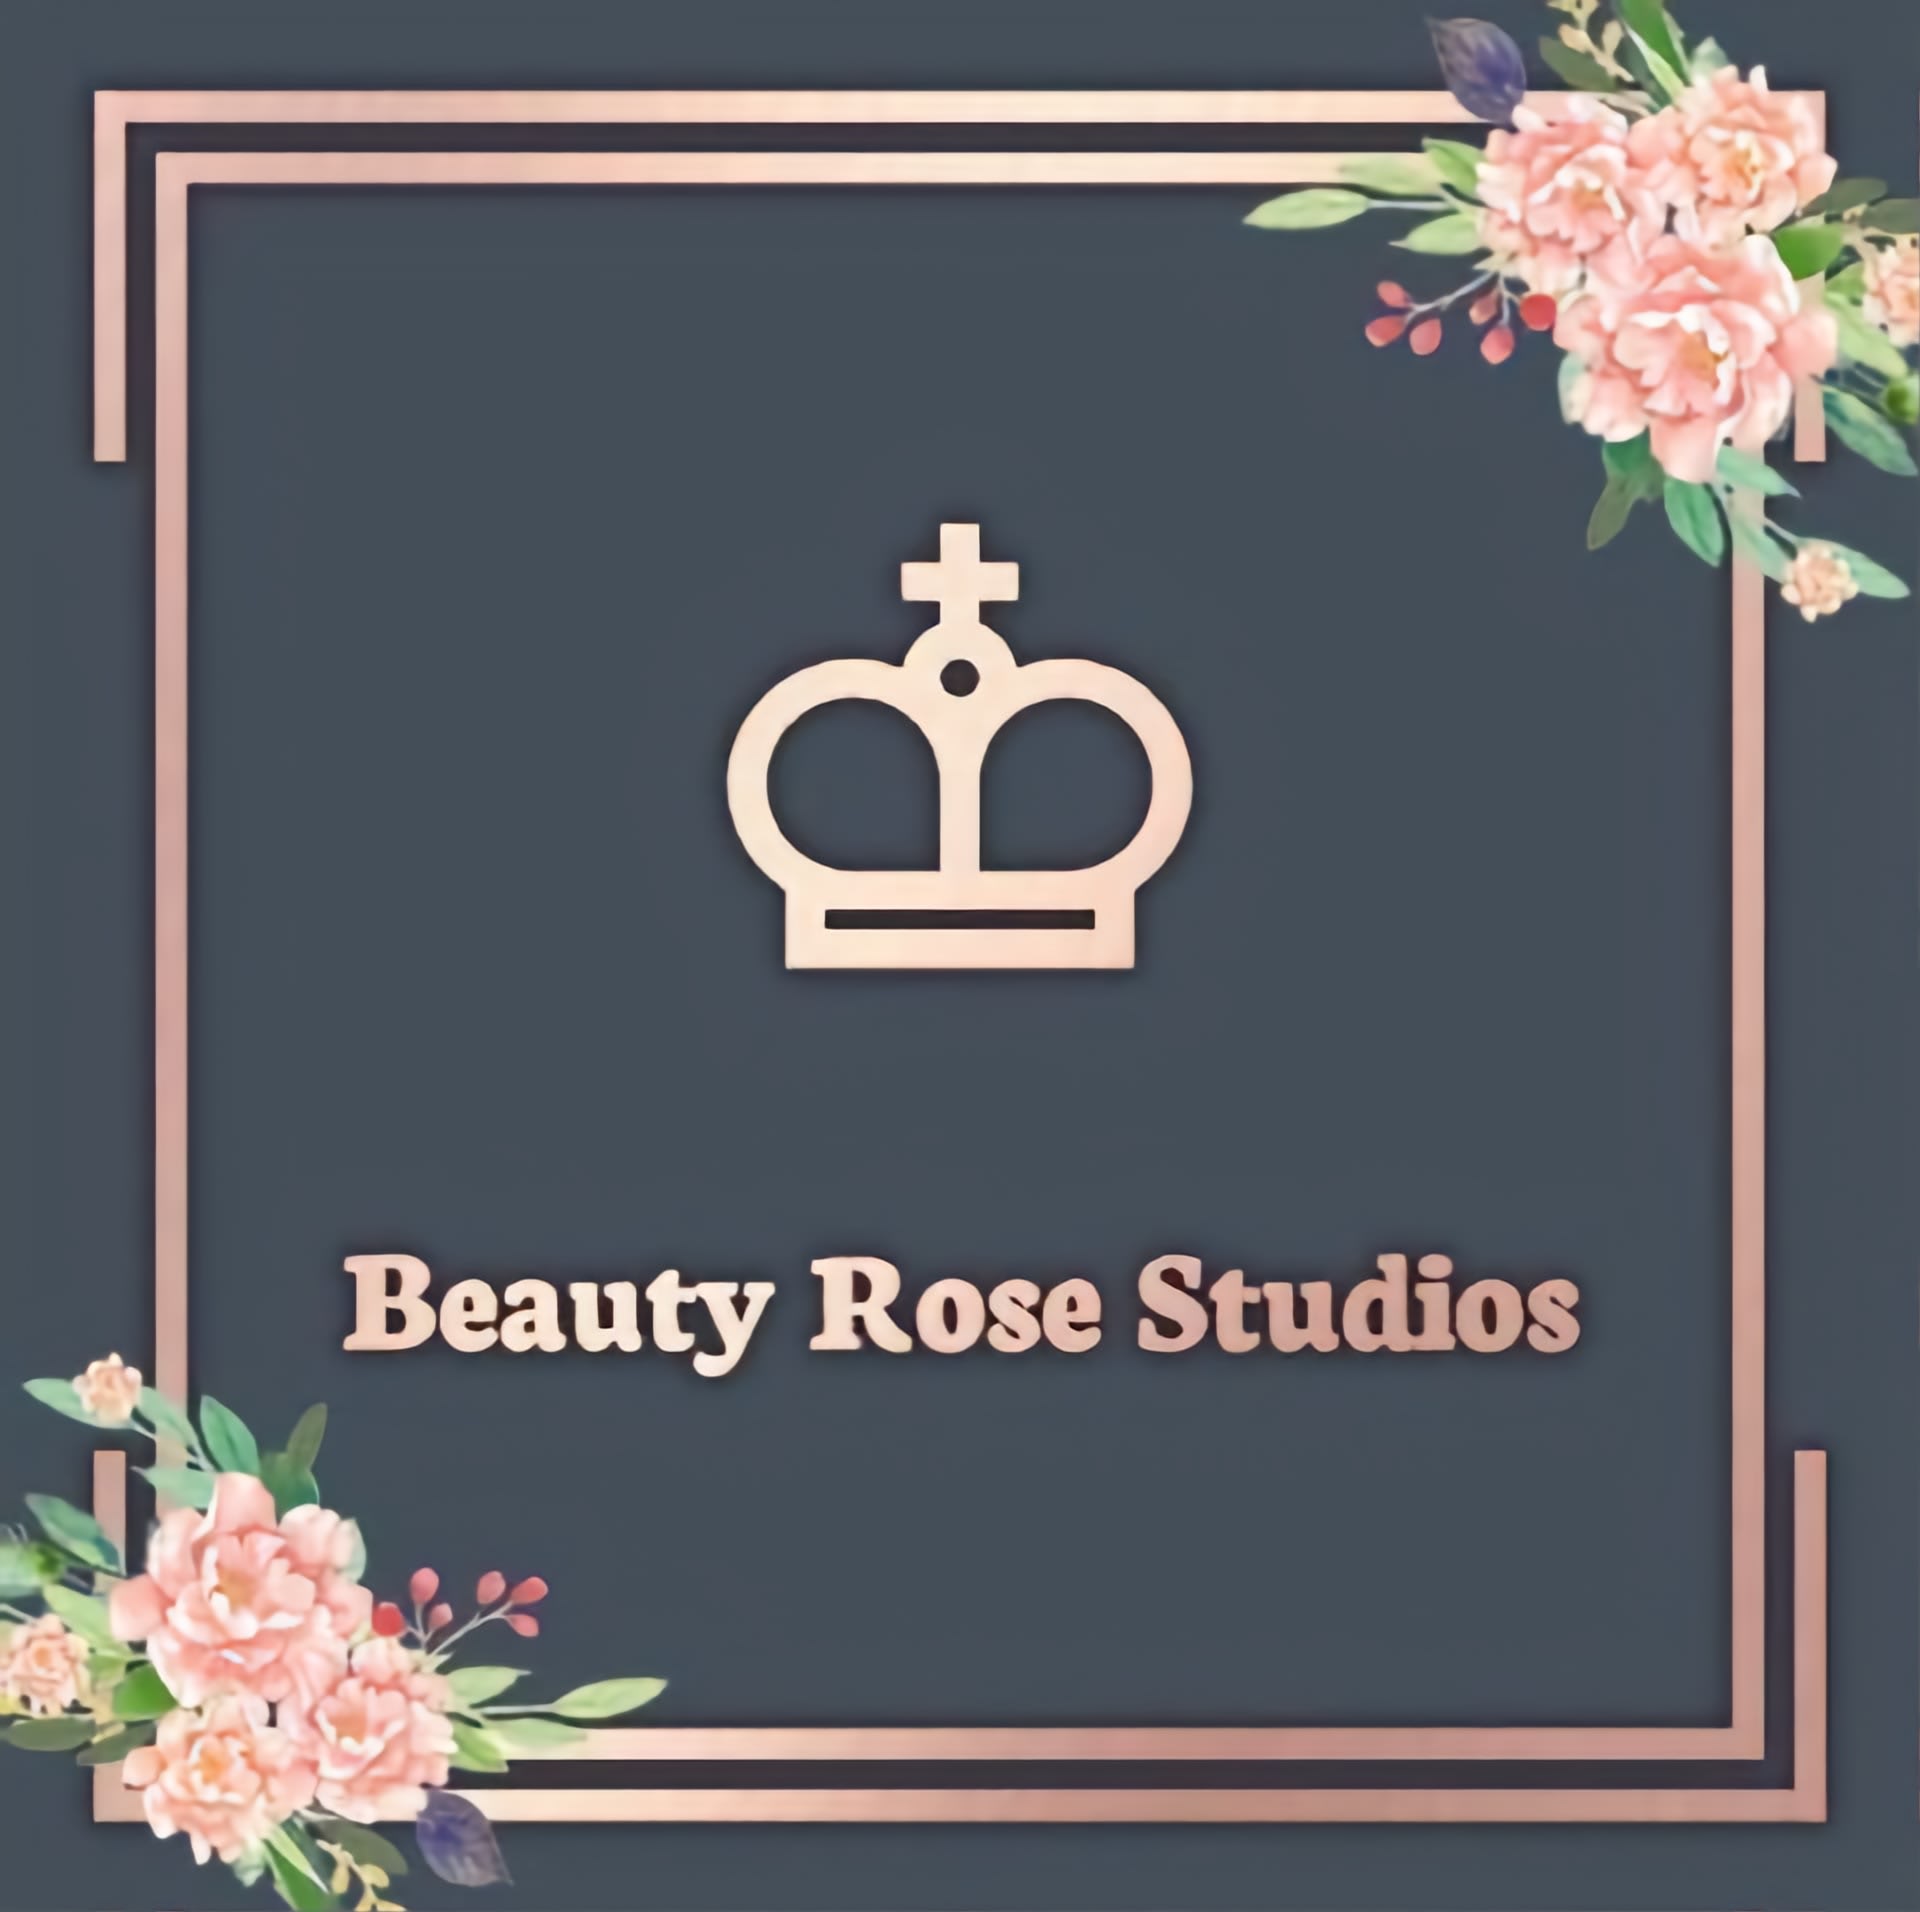 Beauty Rose Studios